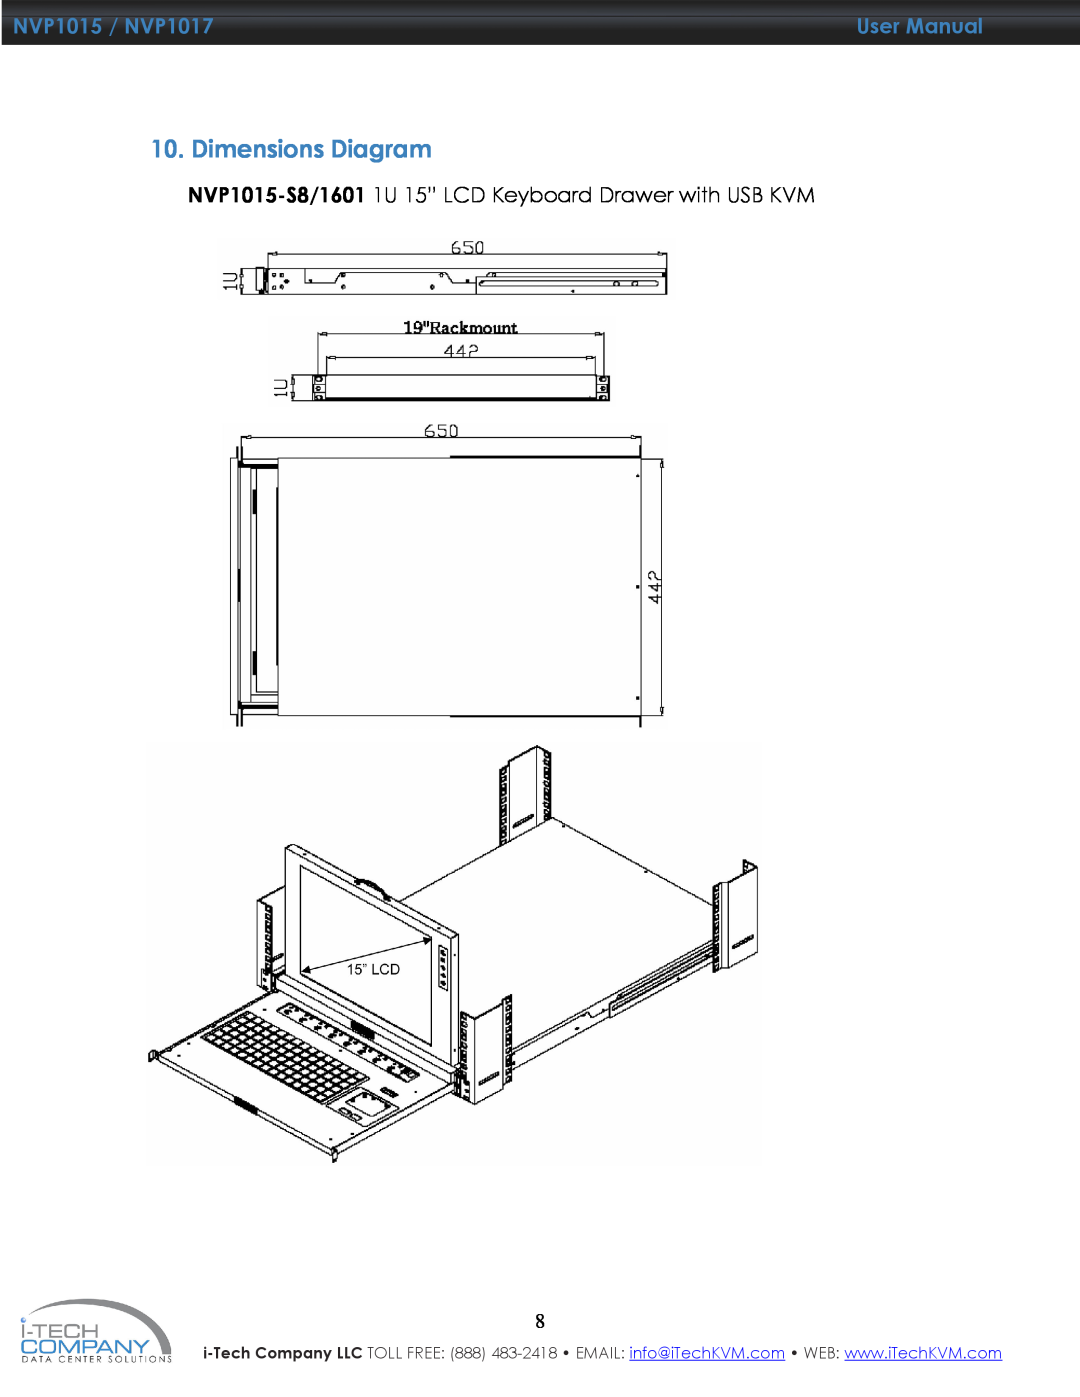 I-Tech Company manual Dimensions Diagram, NVP1015-S8/1601 1U 15” LCD Keyboard Drawer with USB KVM, NVP1015 / NVP1017 